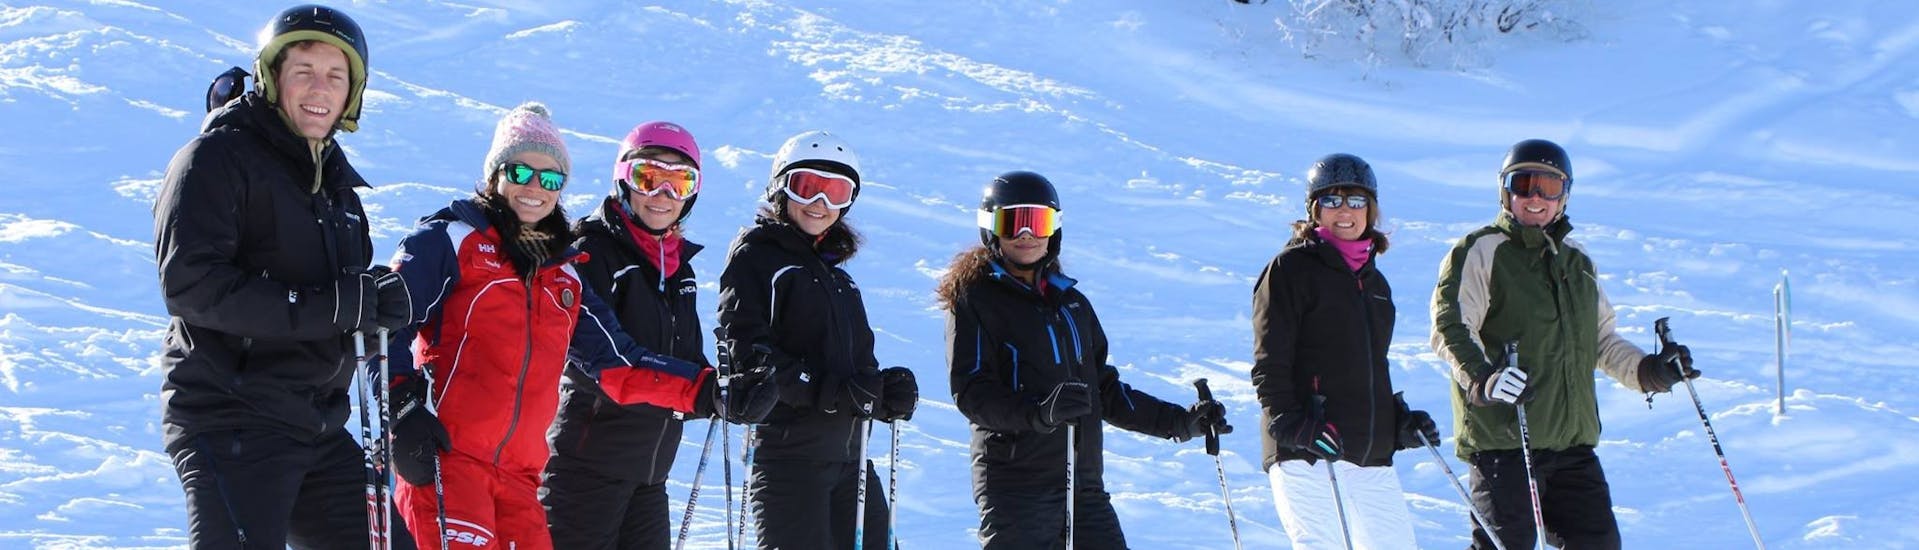 Lezioni di sci per adulti a partire da 13 anni per tutti i livelli.